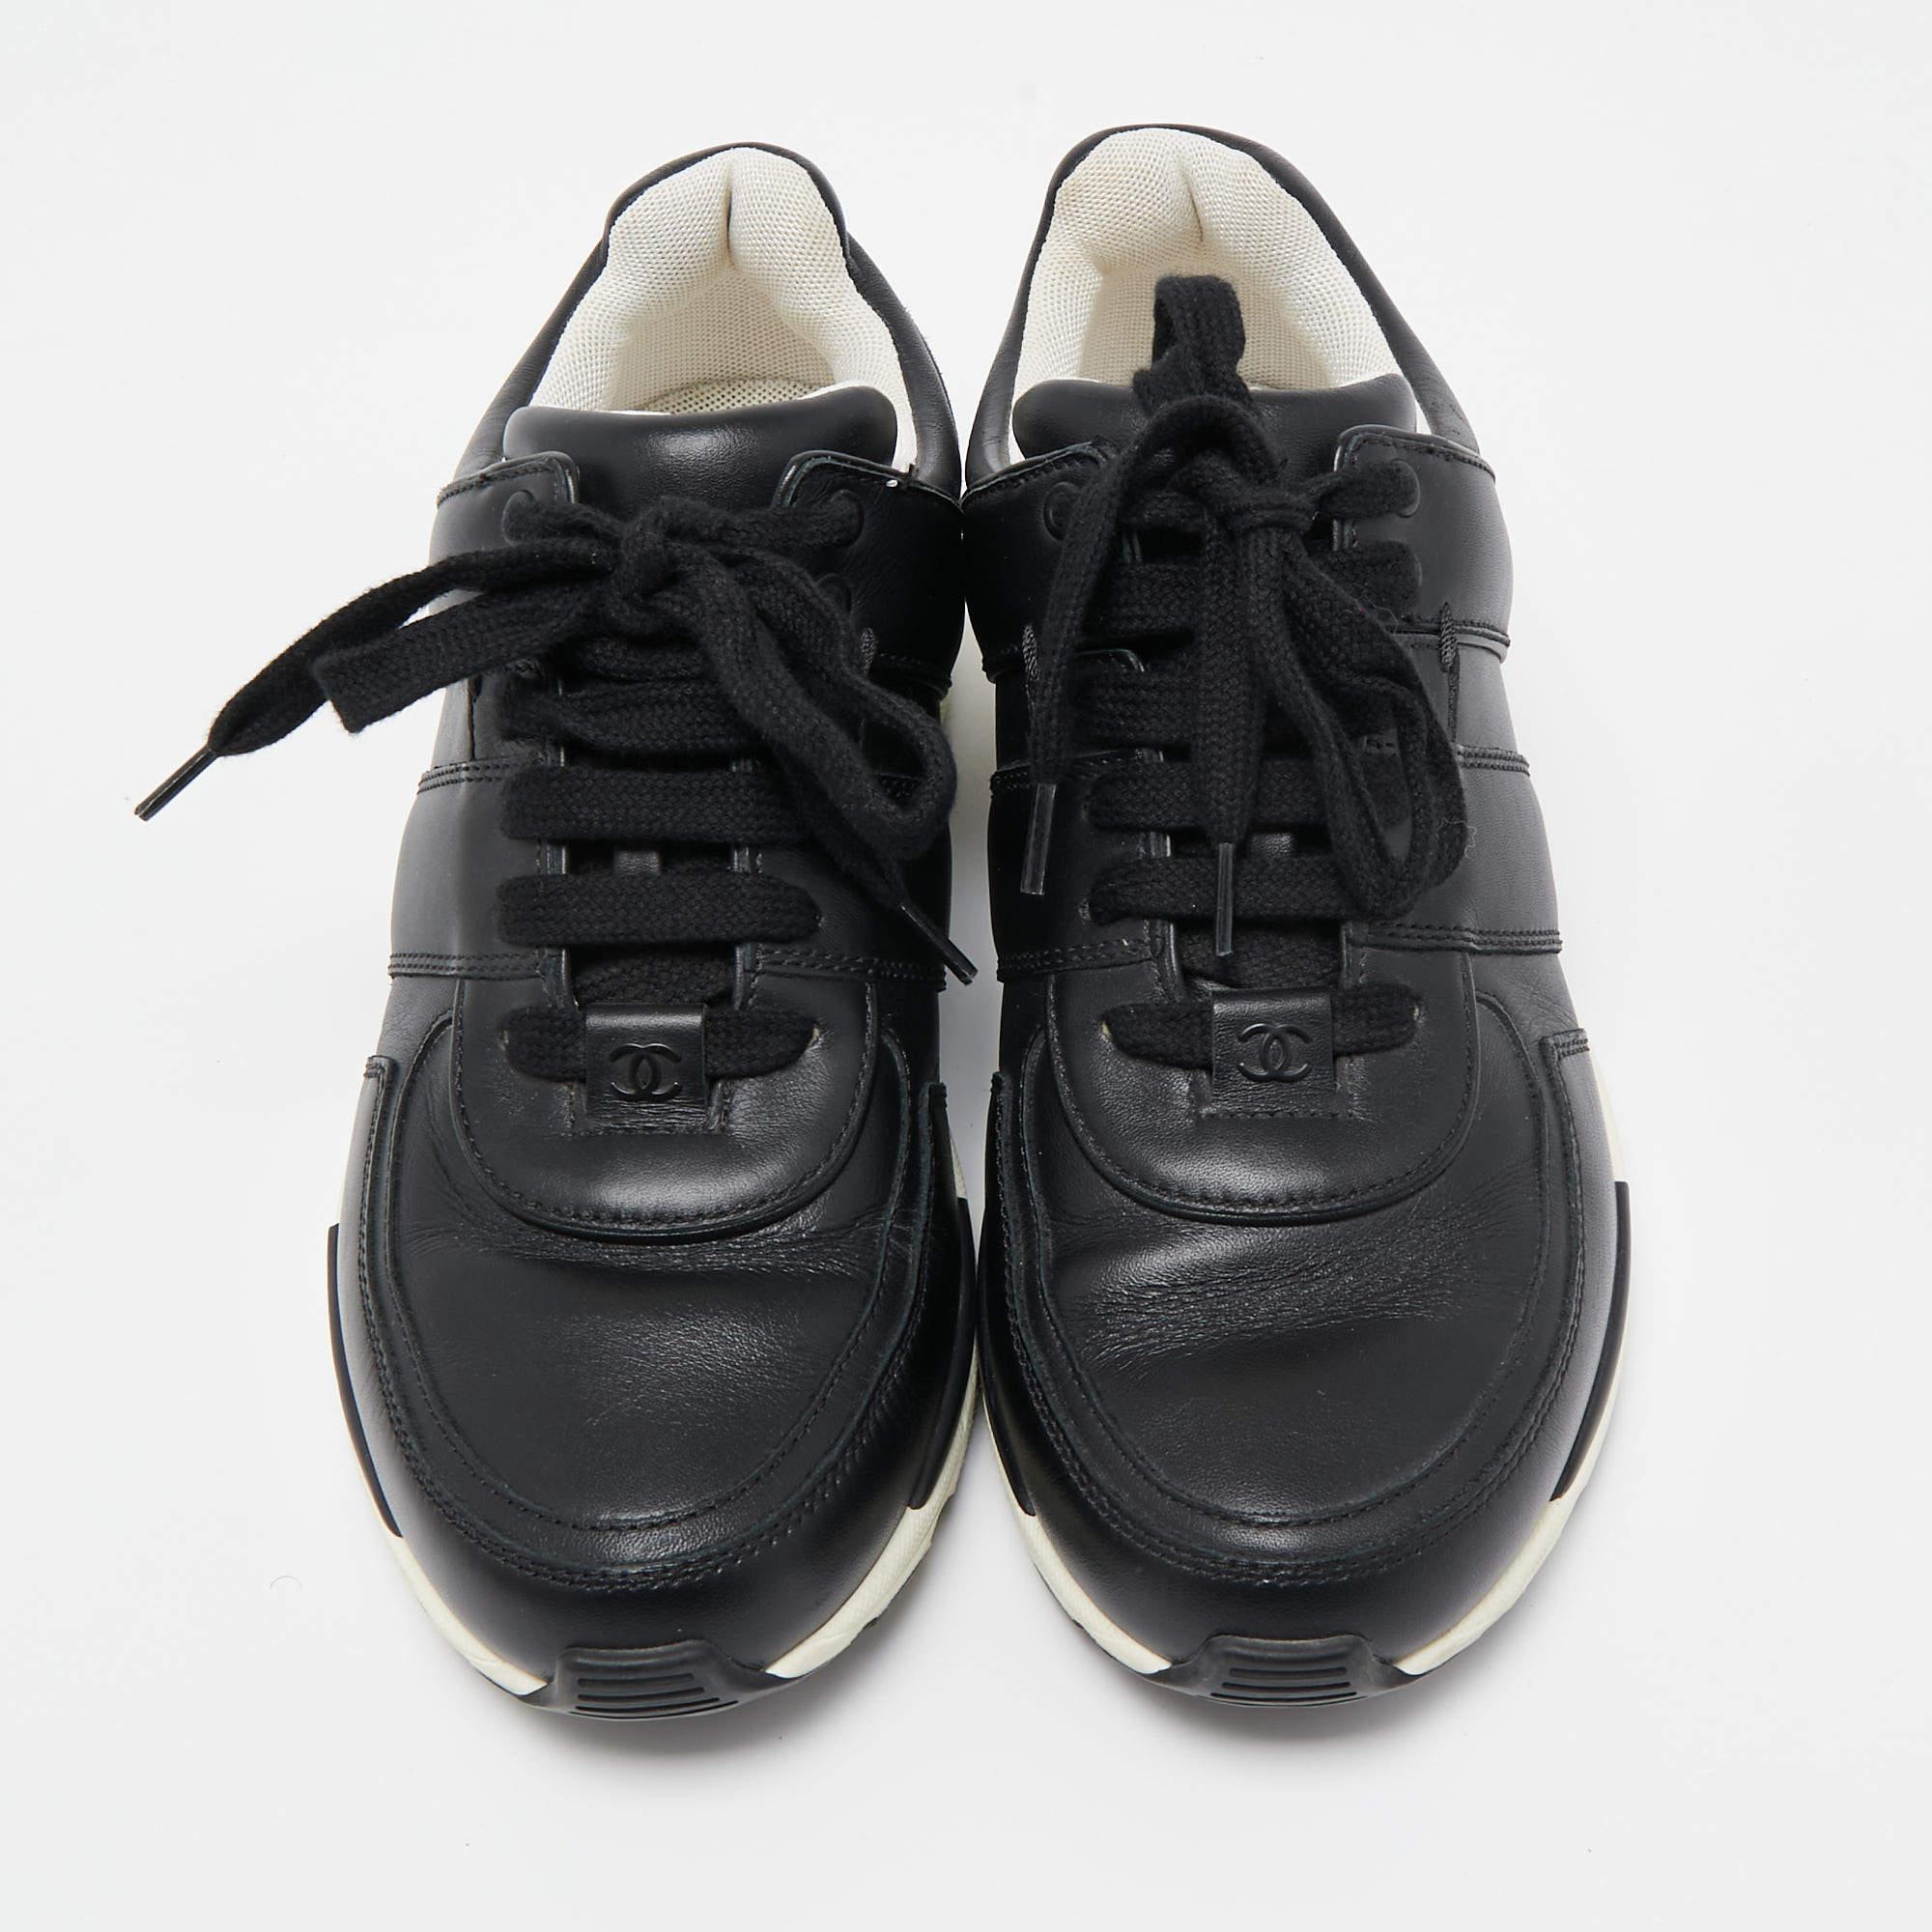 Chanel Black Leather CC Logo Low Top Sneakers Size 38.5 In Good Condition For Sale In Dubai, Al Qouz 2